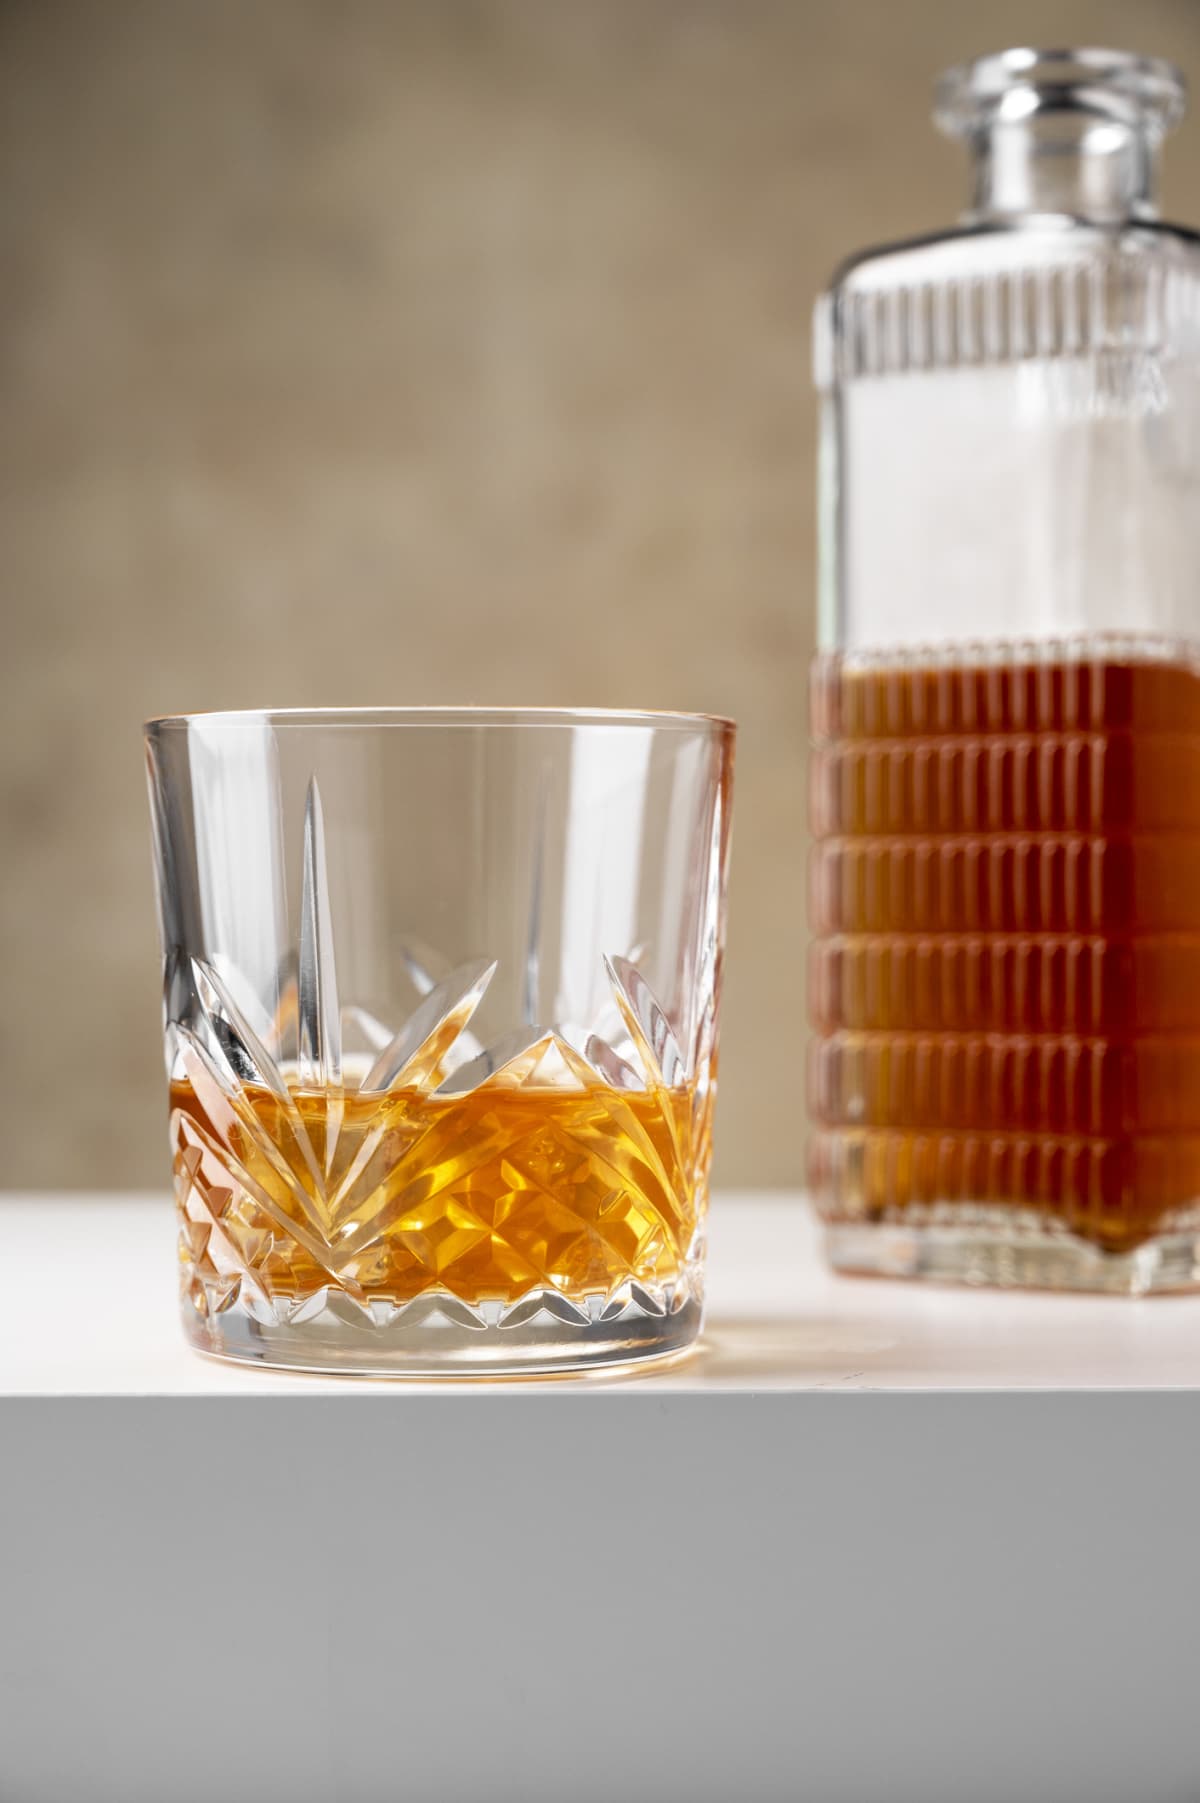 Glass of bourbon next to decanter of bourbon